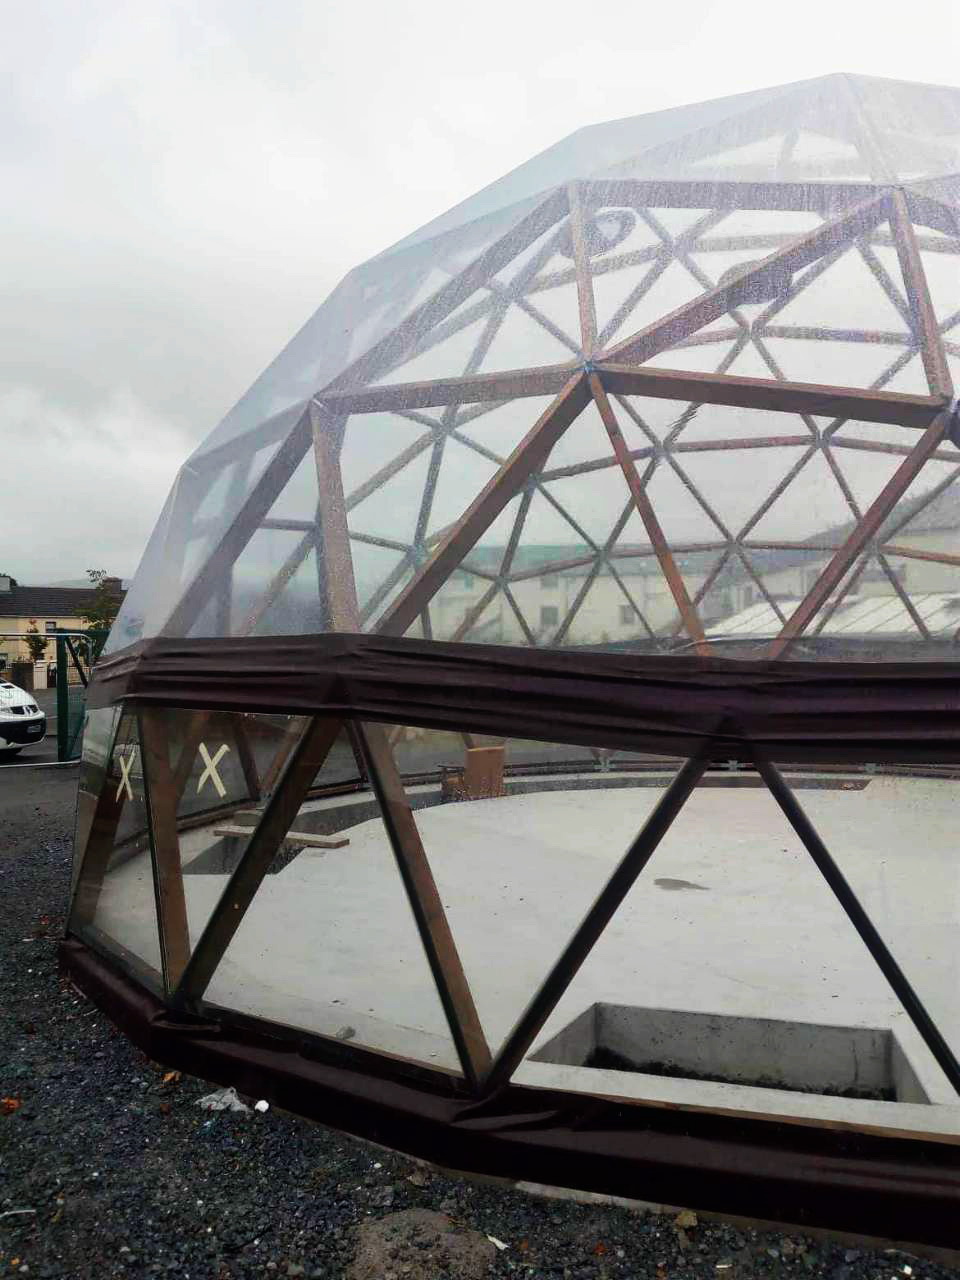 78m² Solar dome Ø10m F4 H5m | Tralee, Ireland